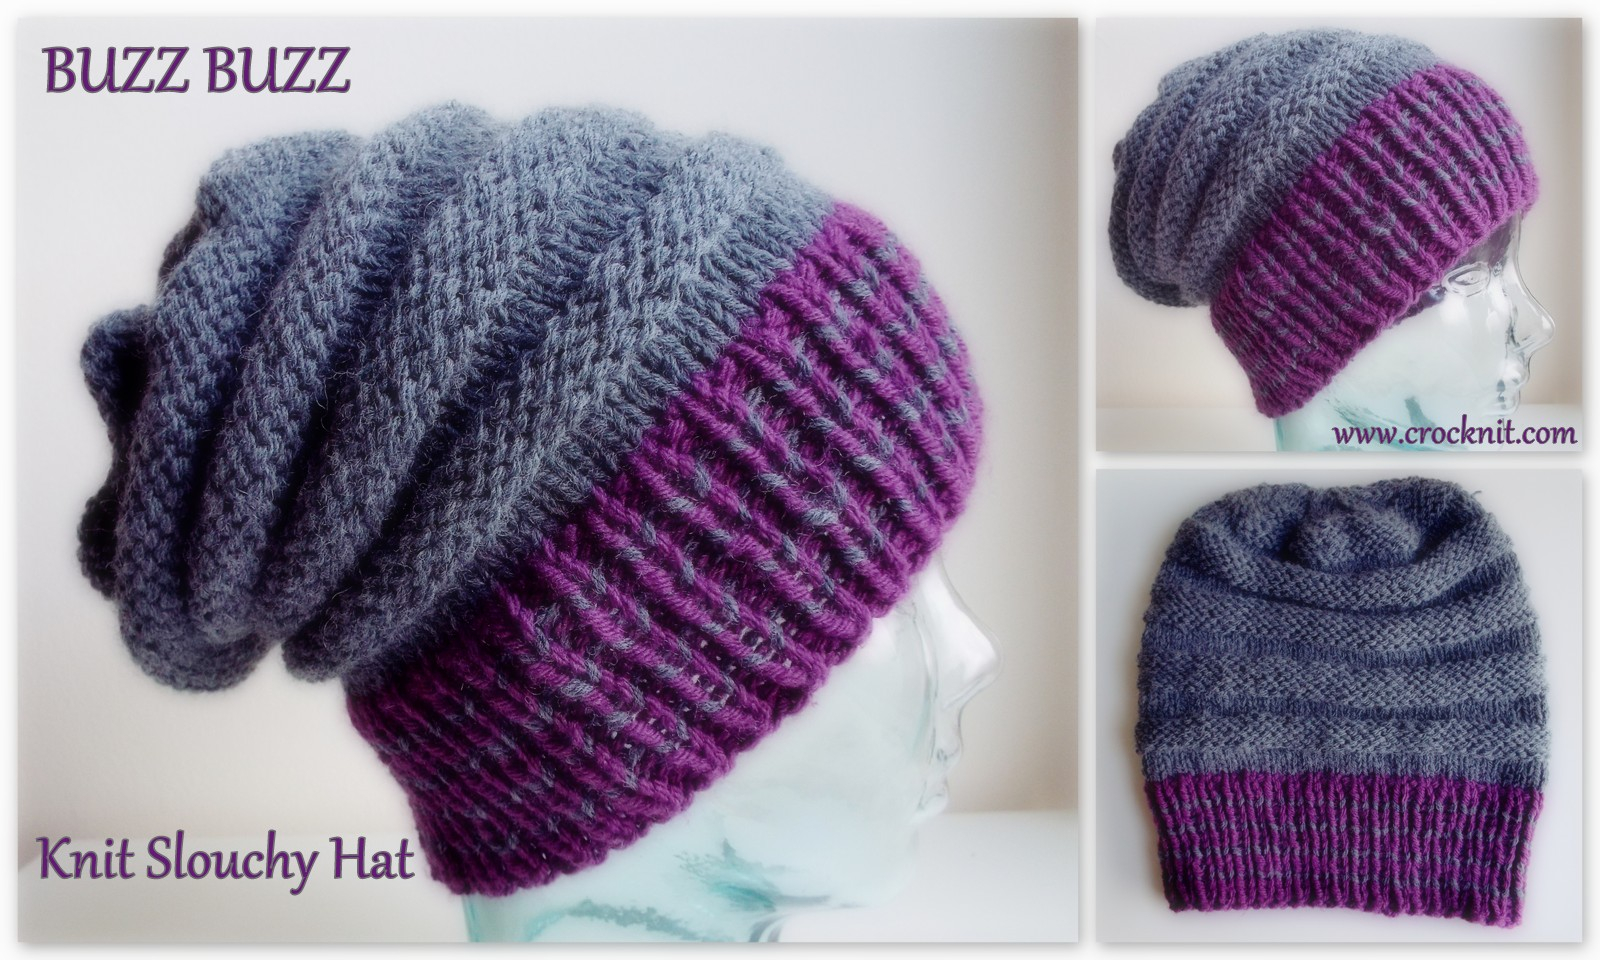 Knit Slouchy Beanie Pattern Microcknit Creations Buzz Buzz Knit Slouchy Hat